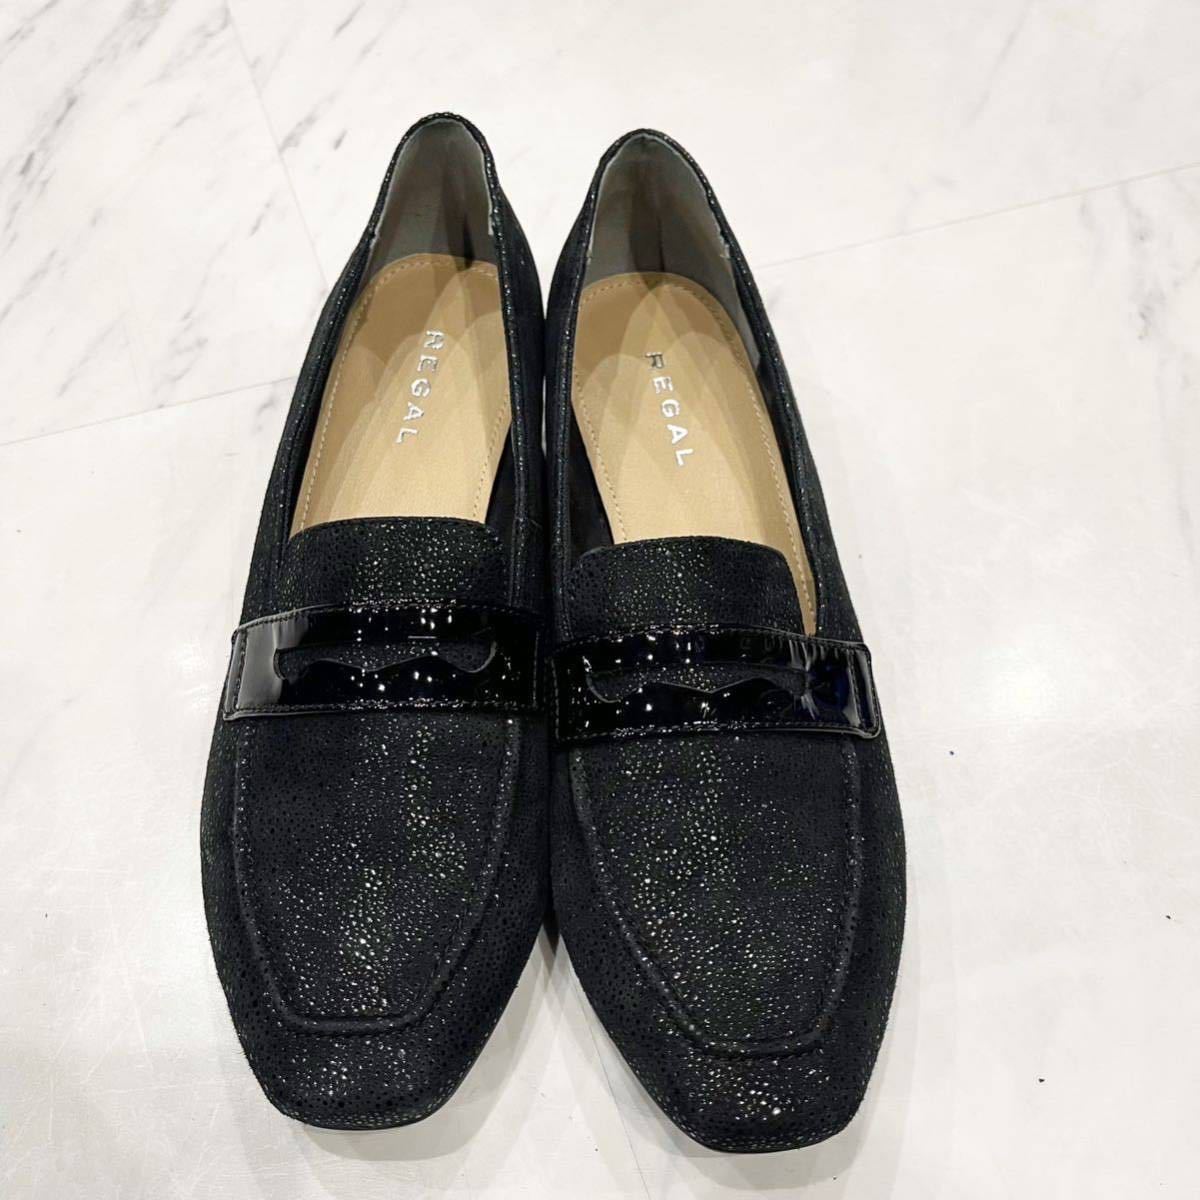 REGAL リーガル レディース シューズ 靴 パンプス レディース 約 24.5cm 相当 ブラック 黒 ラメ_画像2